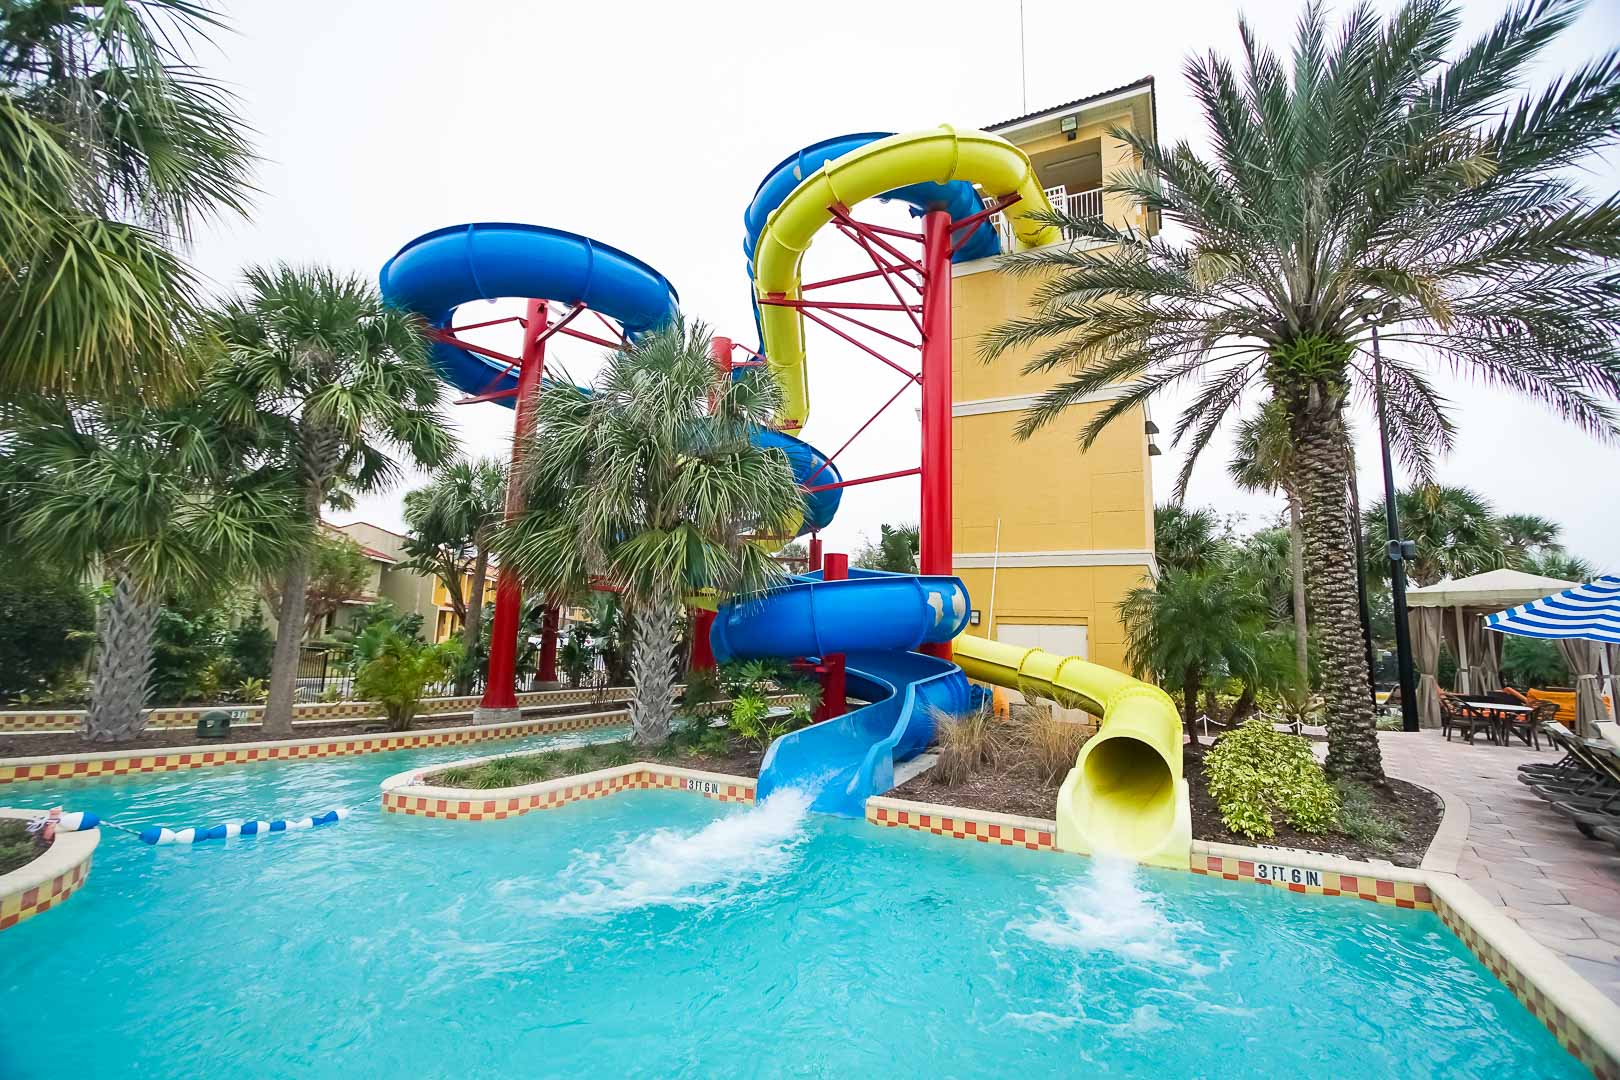 A fun-filled water-slide at VRI's Fantasy World Resort in Florida.